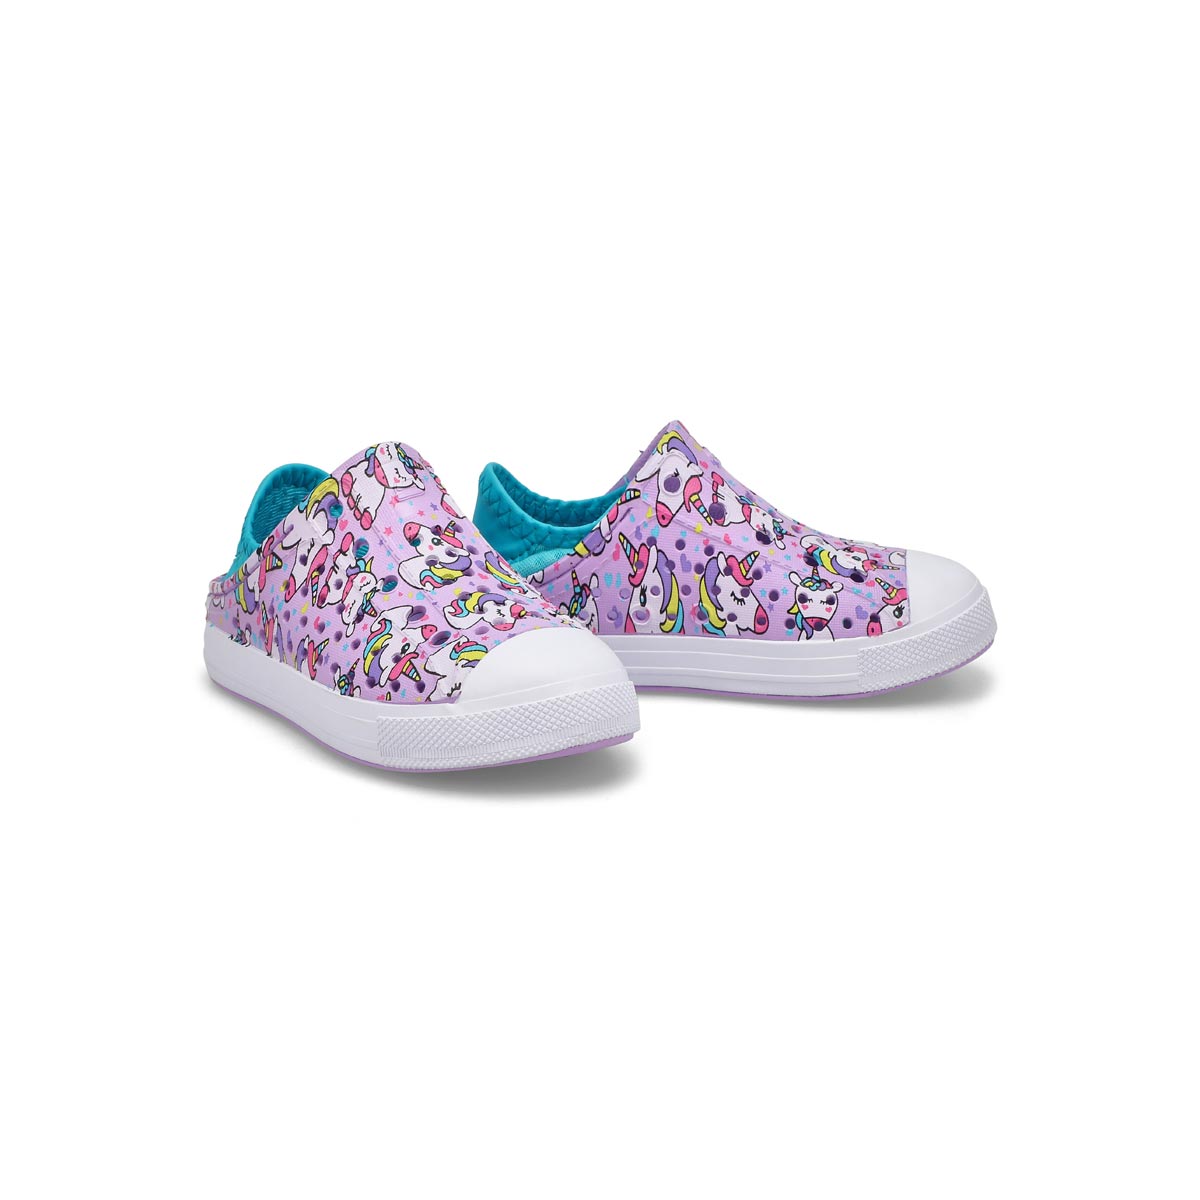 Girls' Guzman Steps Shoe - Lavender/Aqua